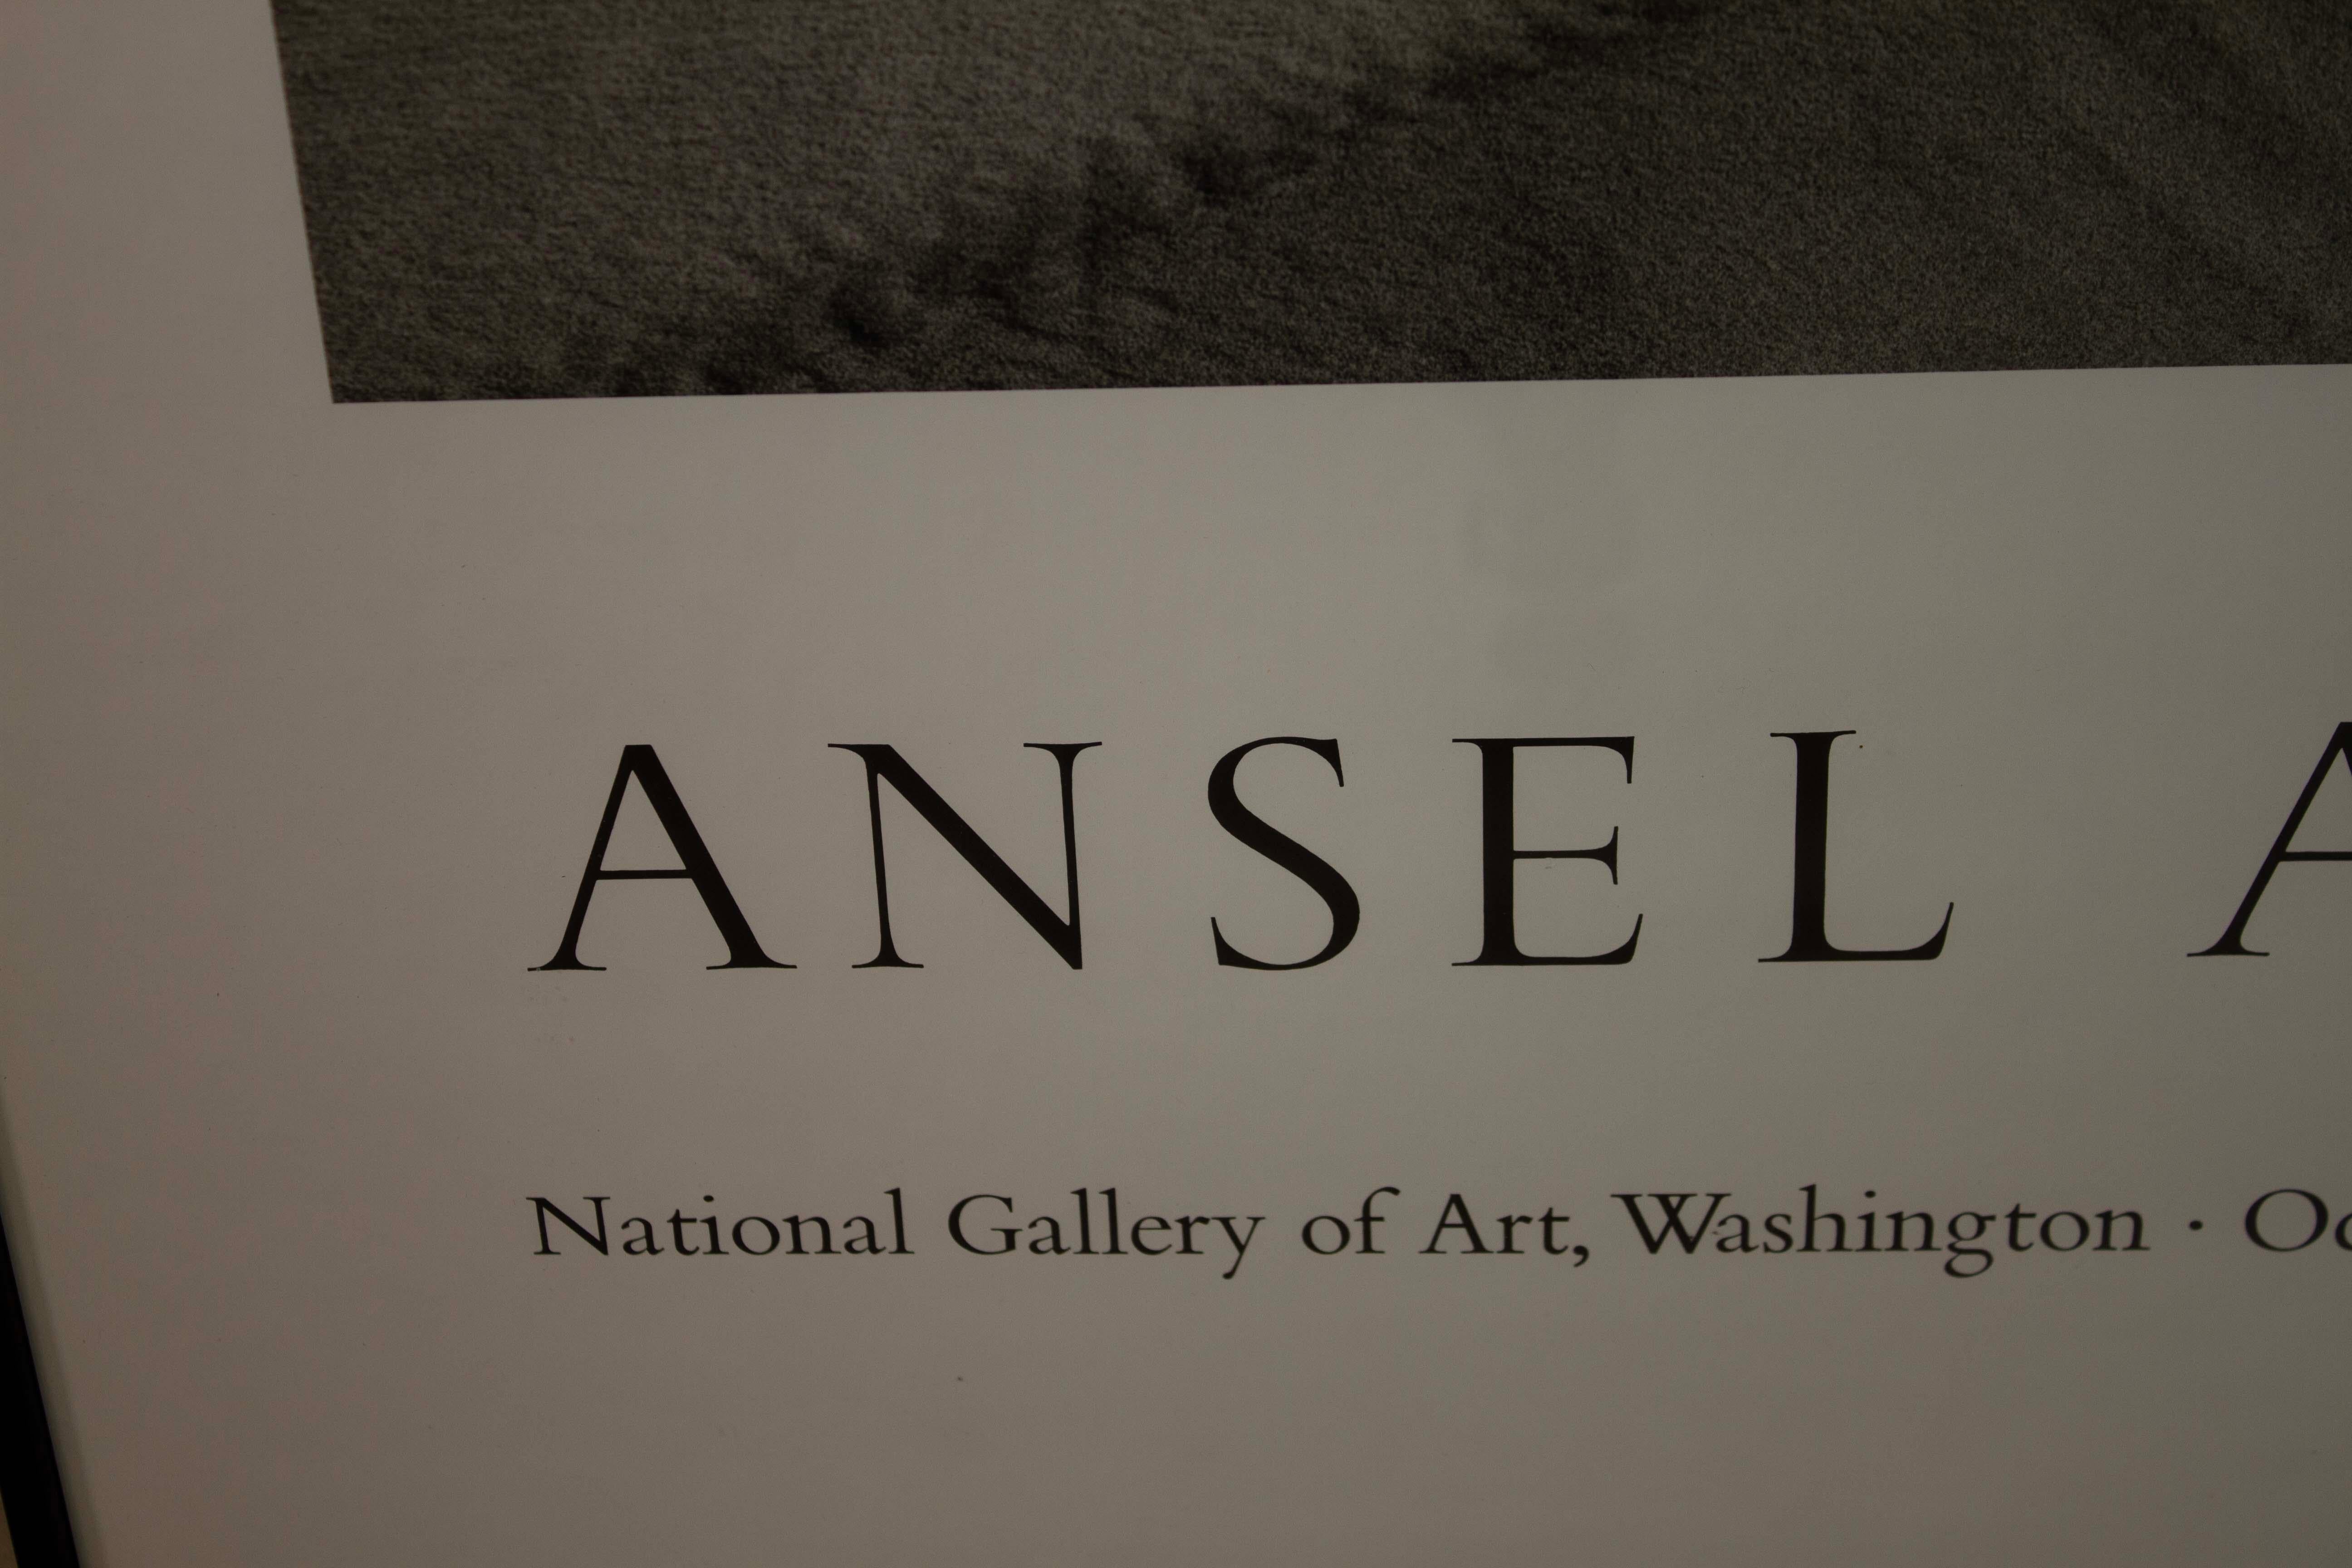 Affiche d'exposition d'art vintage encadrée Ansel Adams Vintage National Gallery of Art, 1985/86 1